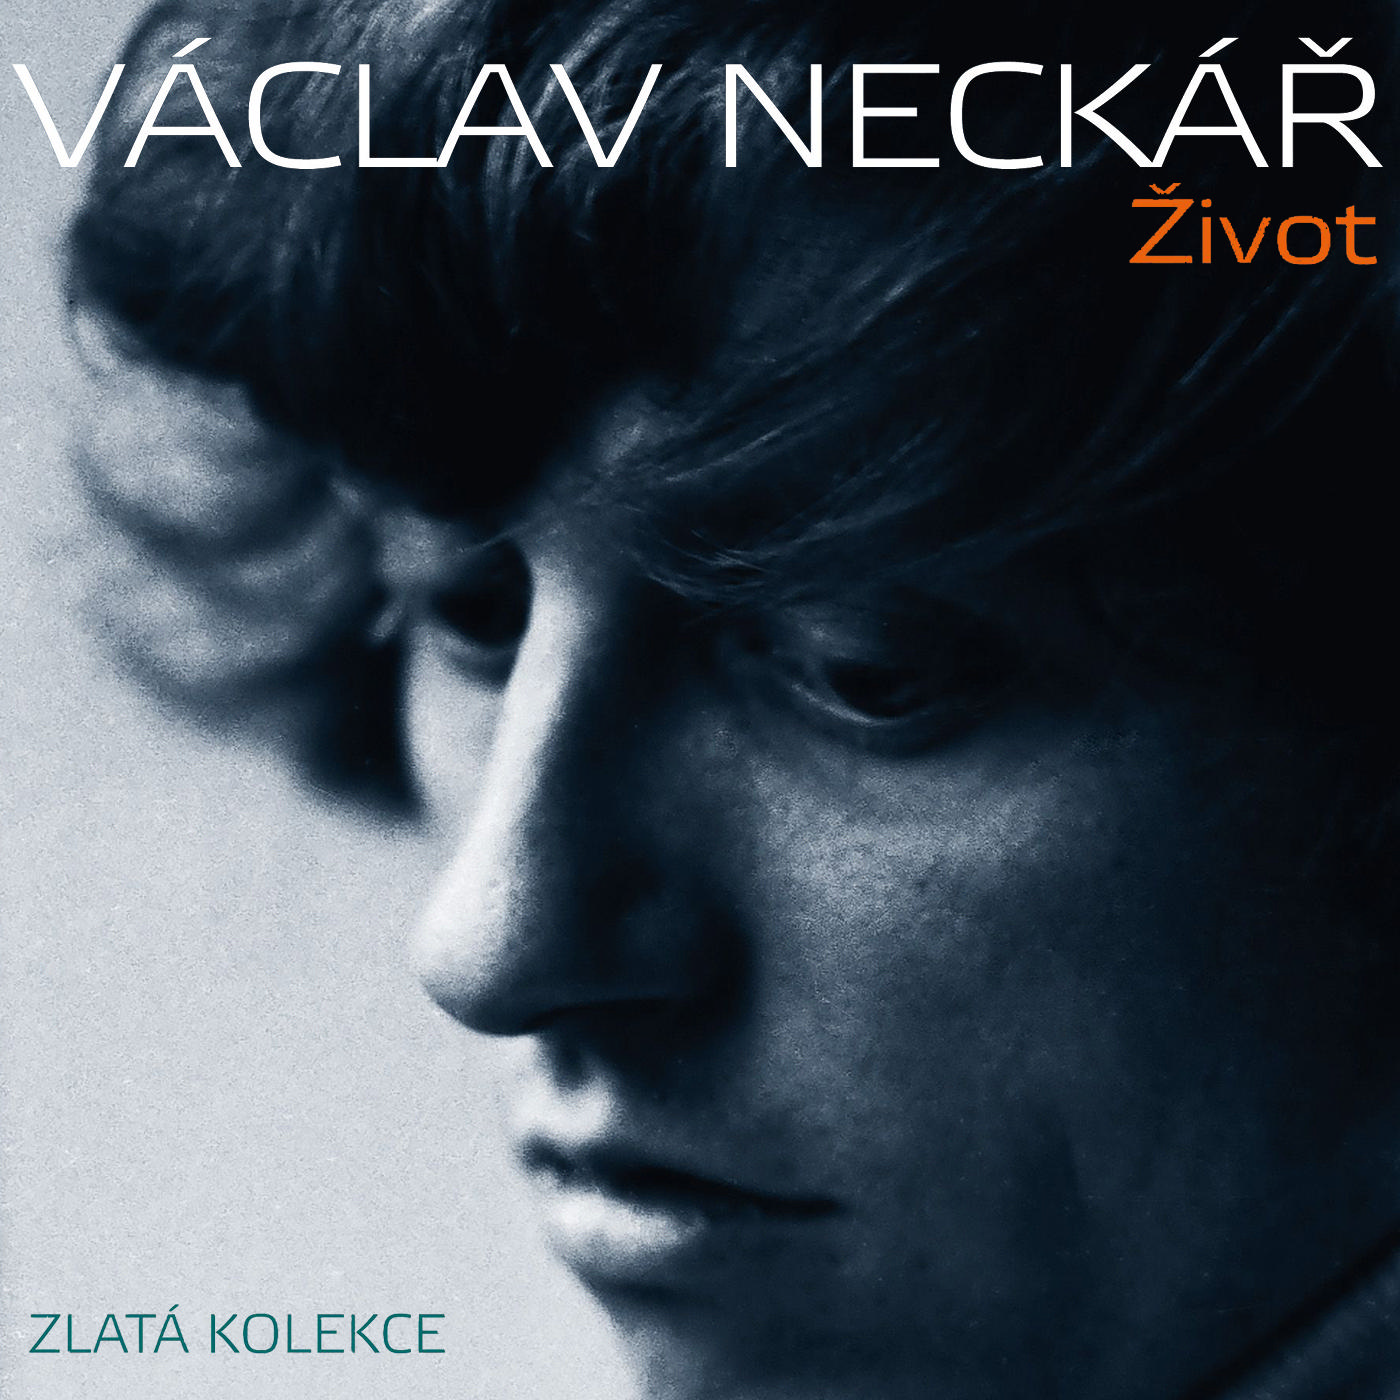 CD Shop - NECKAR VACLAV ZIVOT (ZLATA KOLEKCE)